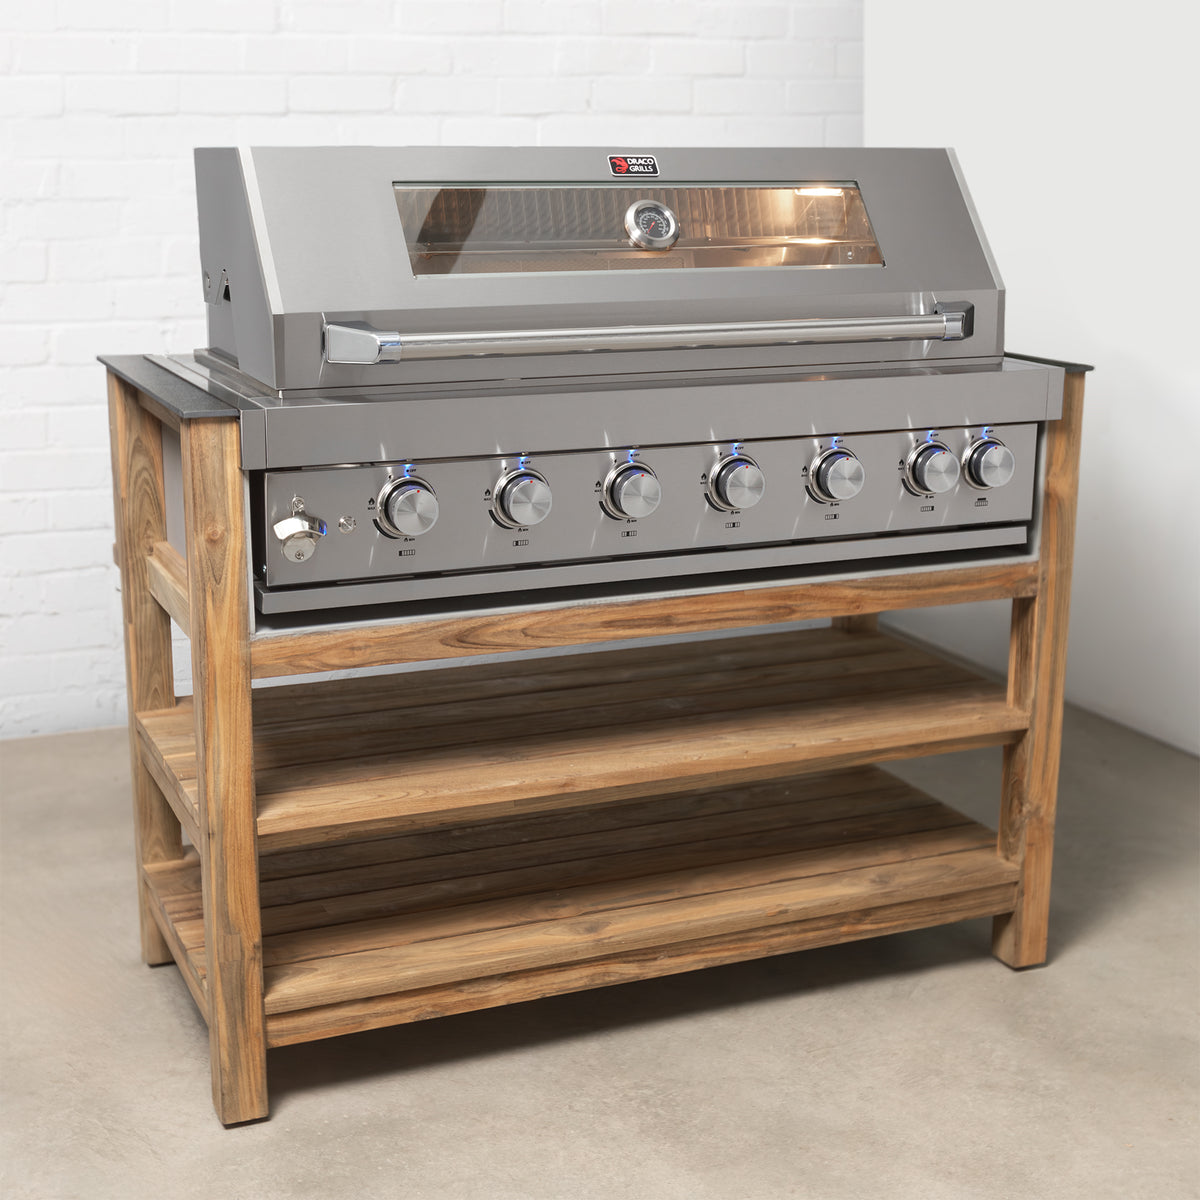 Draco Grills Teak 6 Burner Outdoor Kitchen with Modular Double Cupboard, Single Fridge and Sink